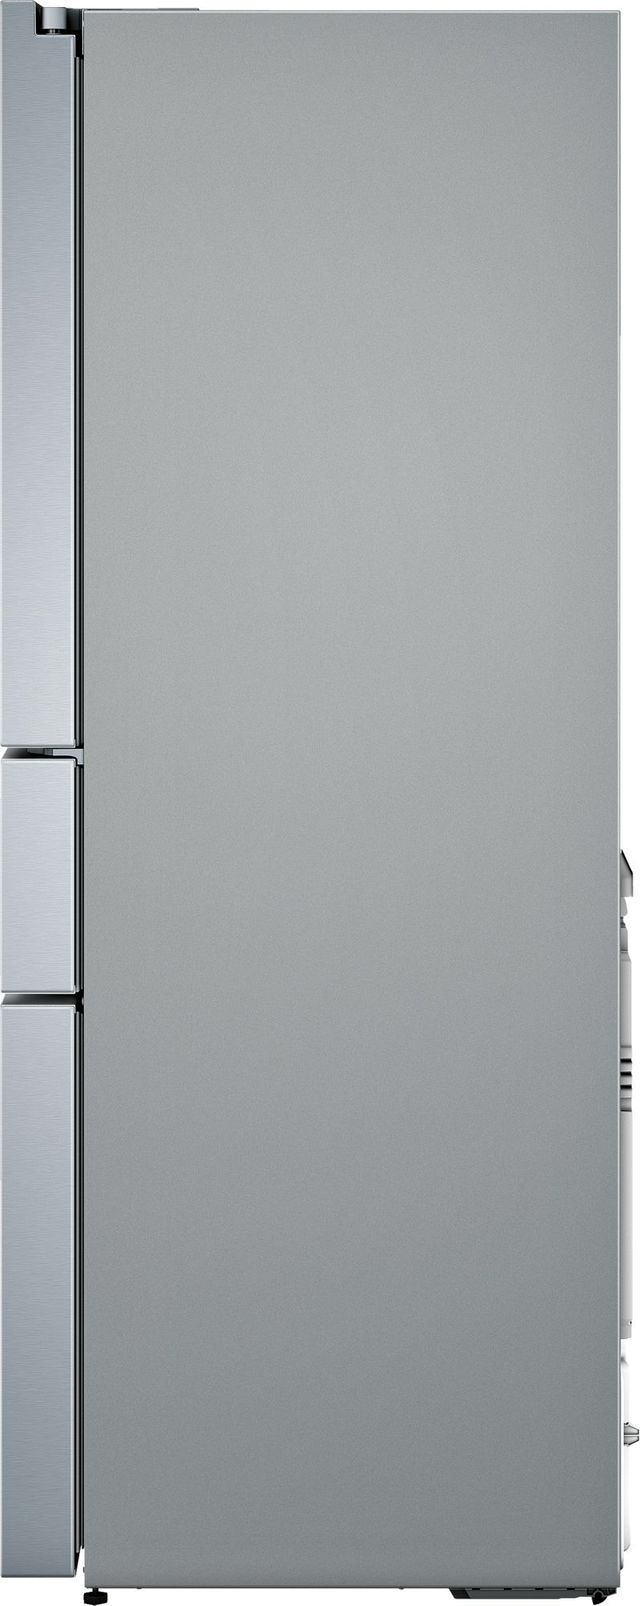 Bosch 800 Series 21.0 Cu. Ft. Stainless Steel Counter Depth French Door Refrigerator 4